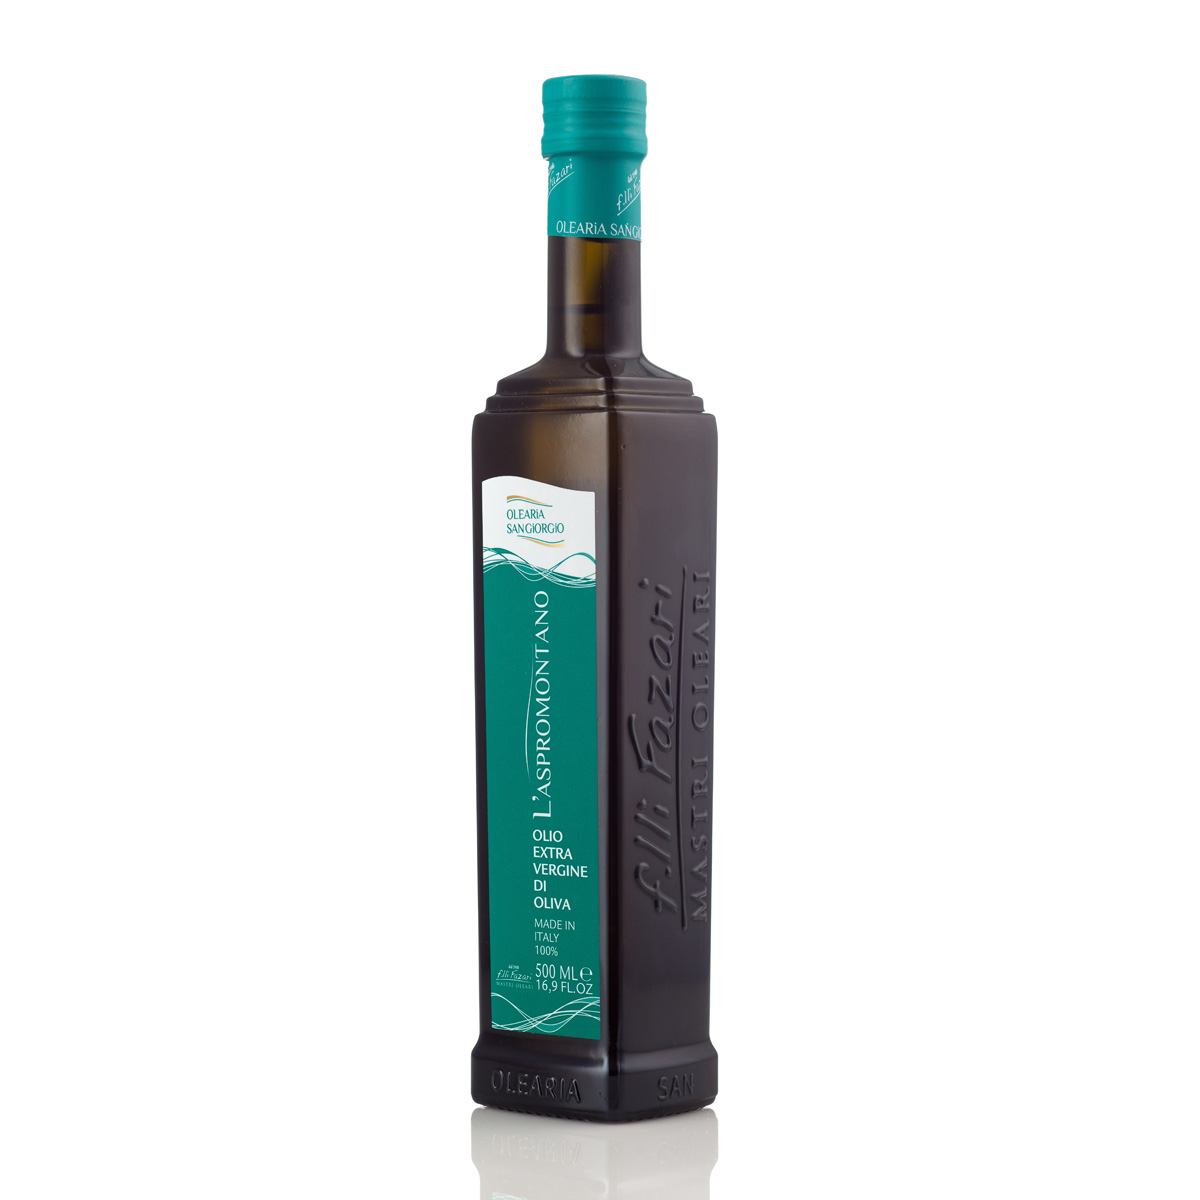 Olio extra vergine L'Aspromontano, Olearia San Giorgio 0,5 l